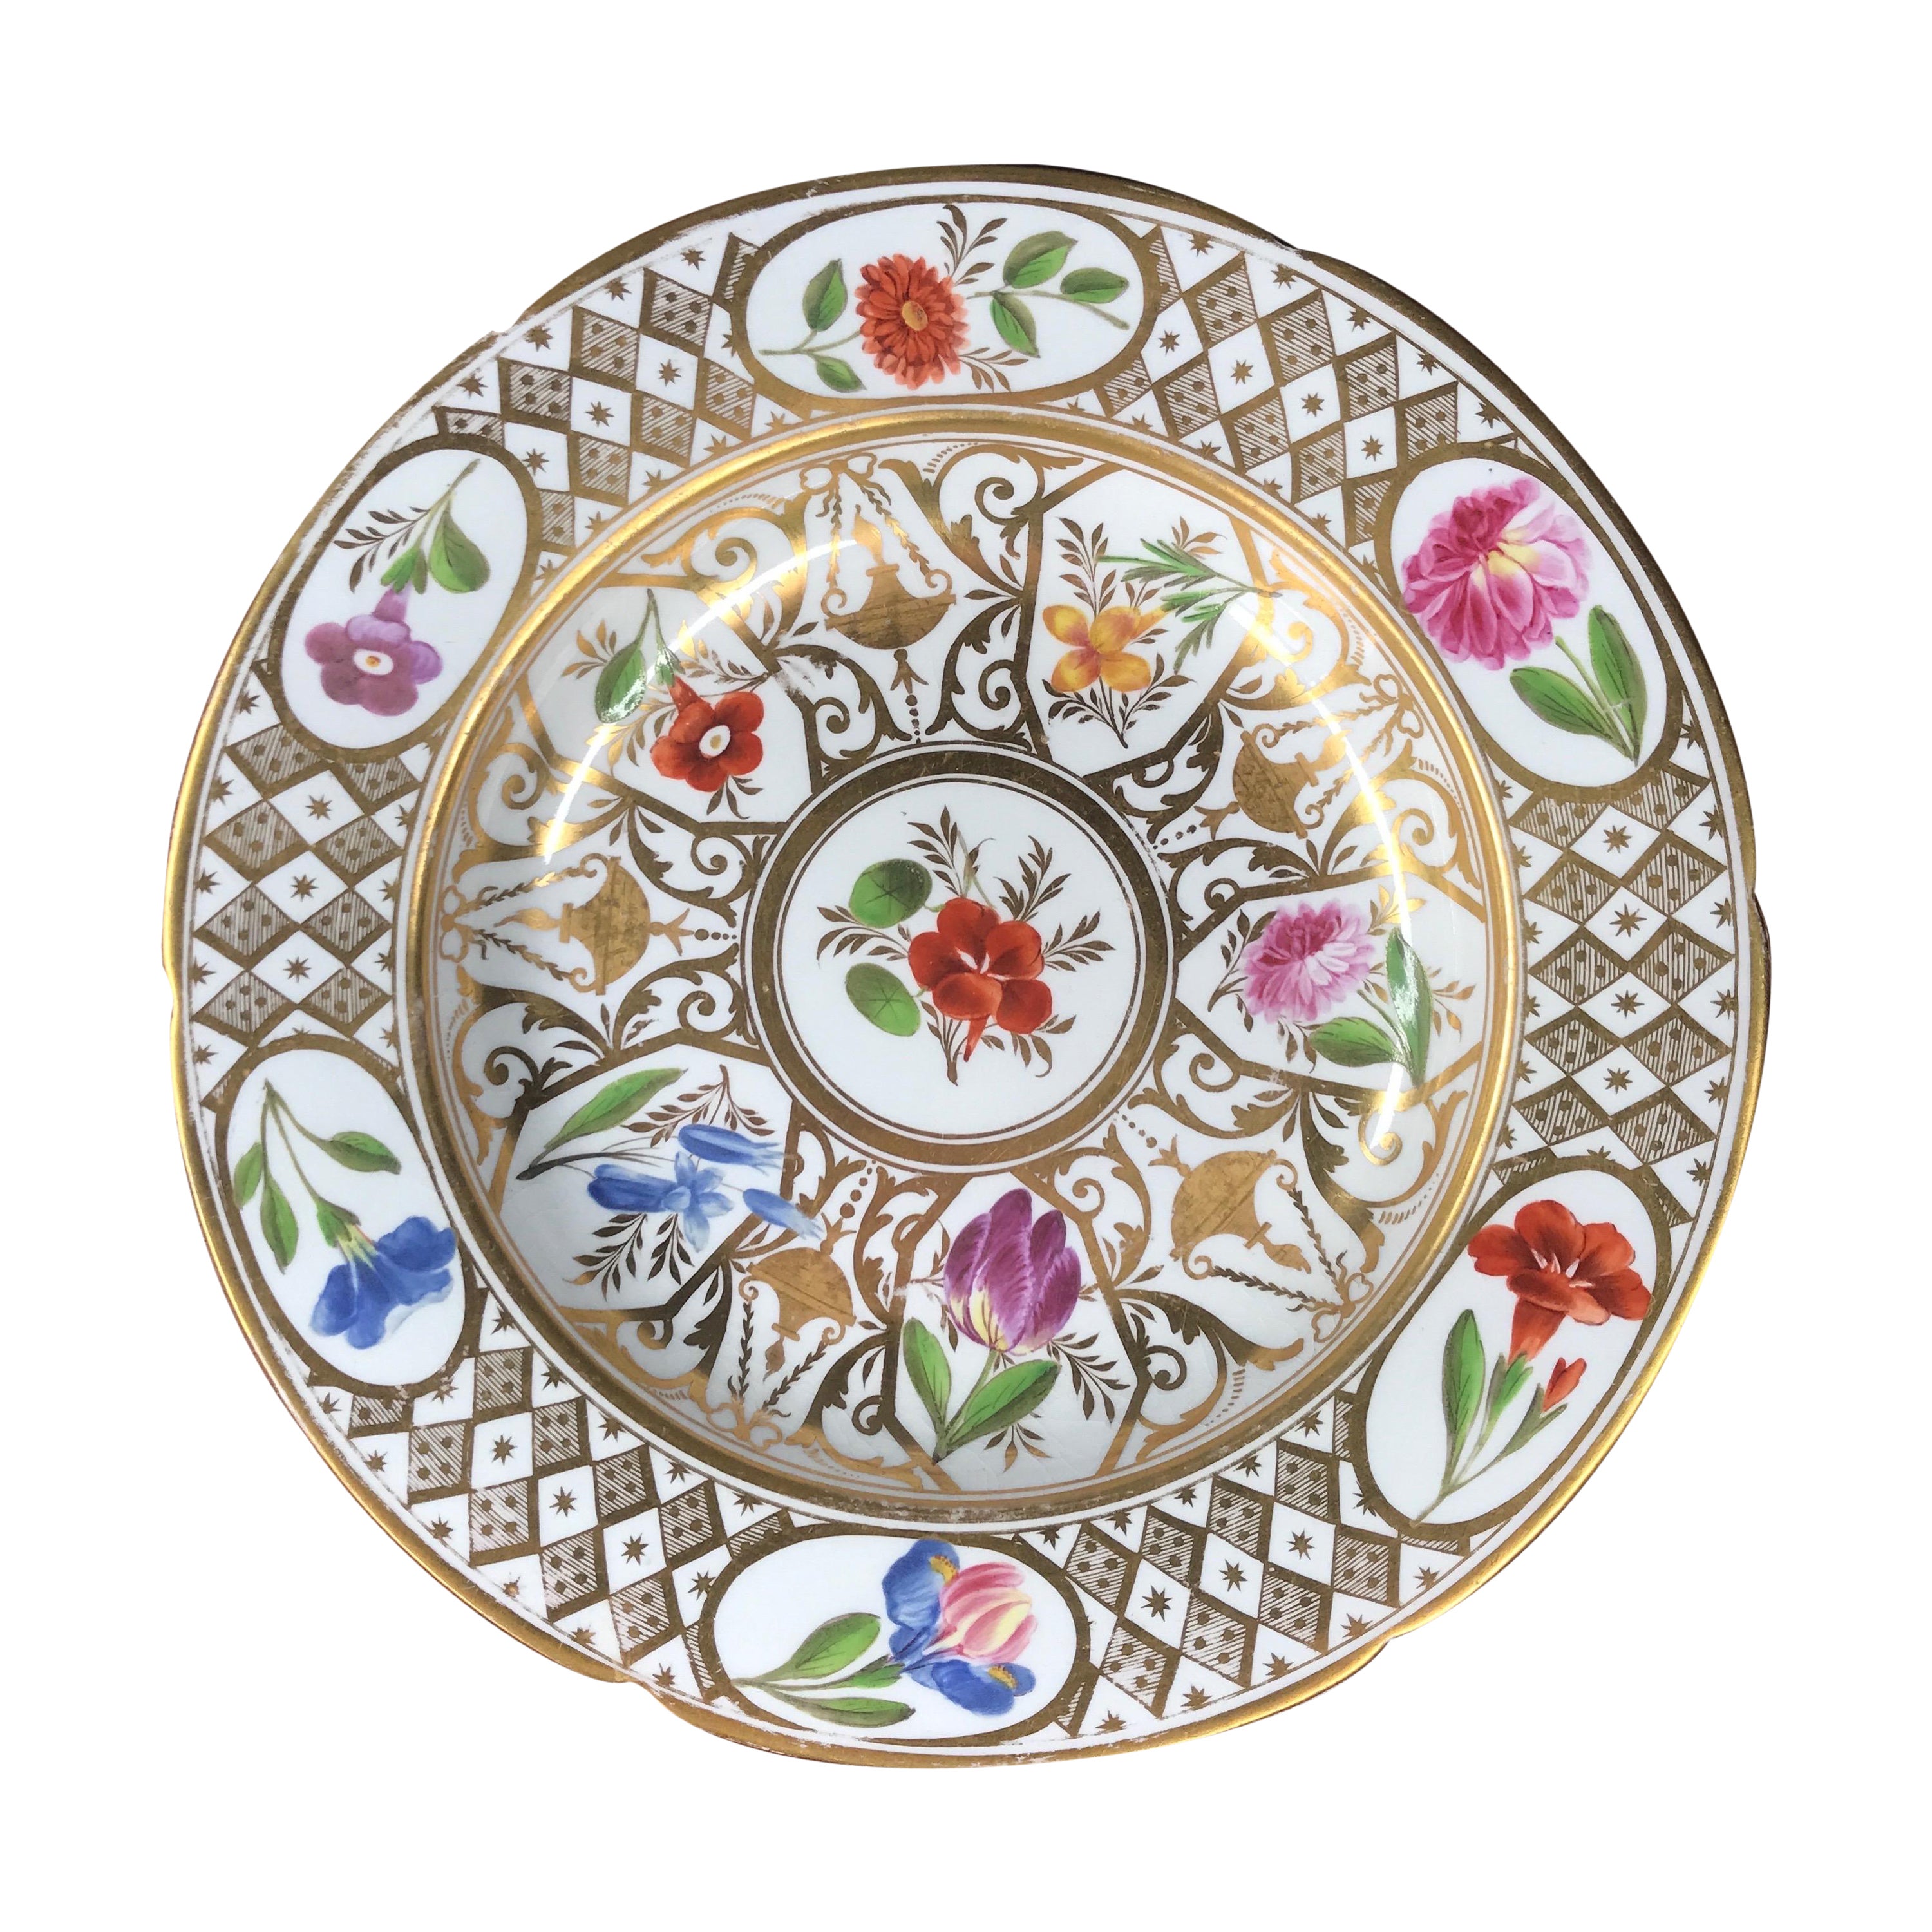 Coalport Plate, Baxter Decorated with Flowers & Geometric Gilding, c. 1805